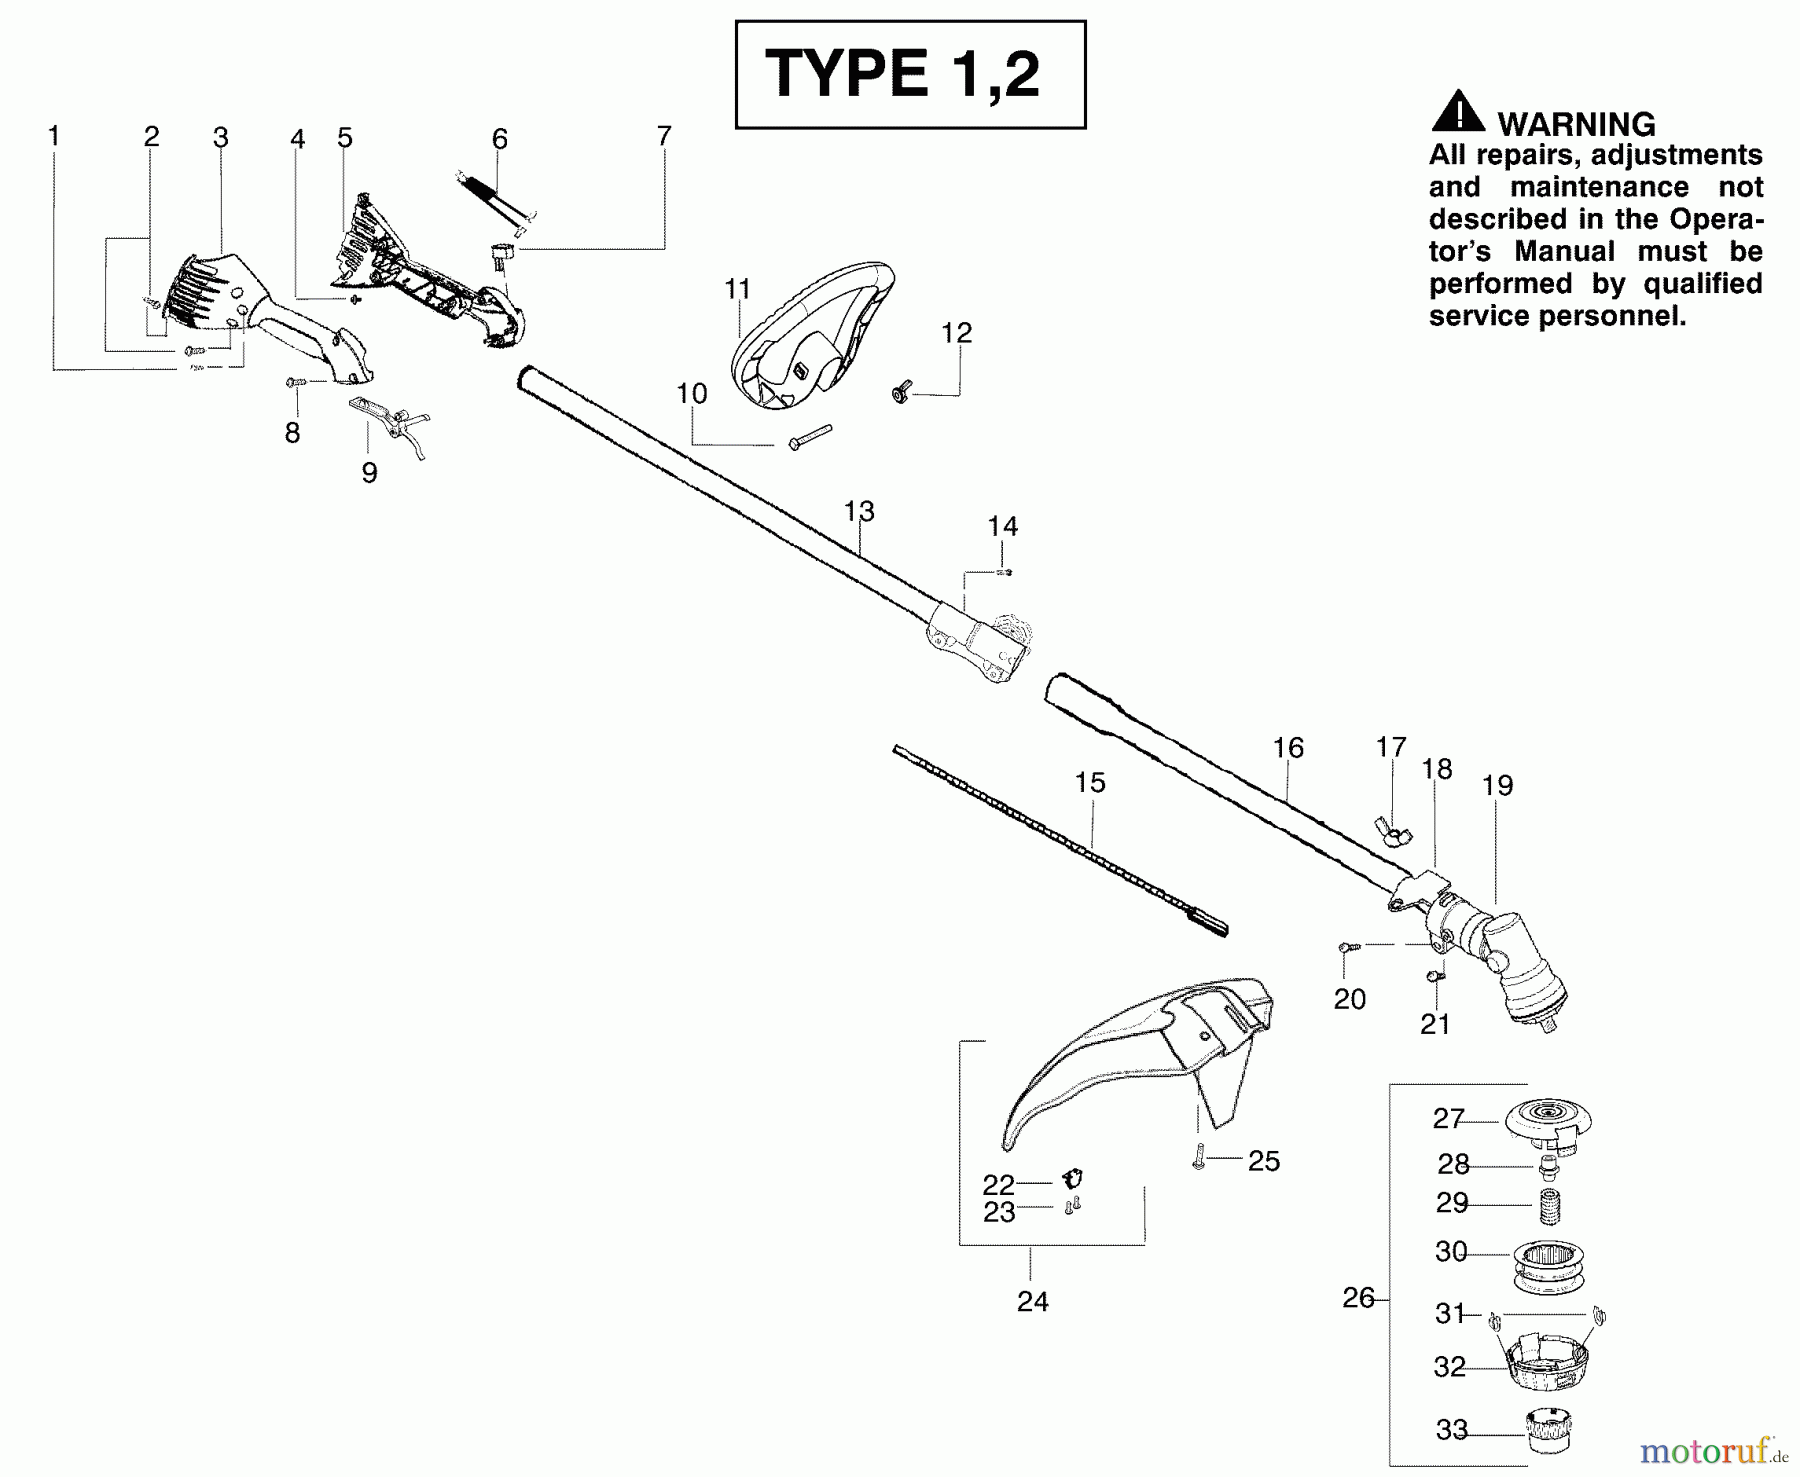  Poulan / Weed Eater Motorsensen, Trimmer PP136E (Type 2) - Poulan Pro String Trimmer Handle & Shaft Assembly Type 1,2